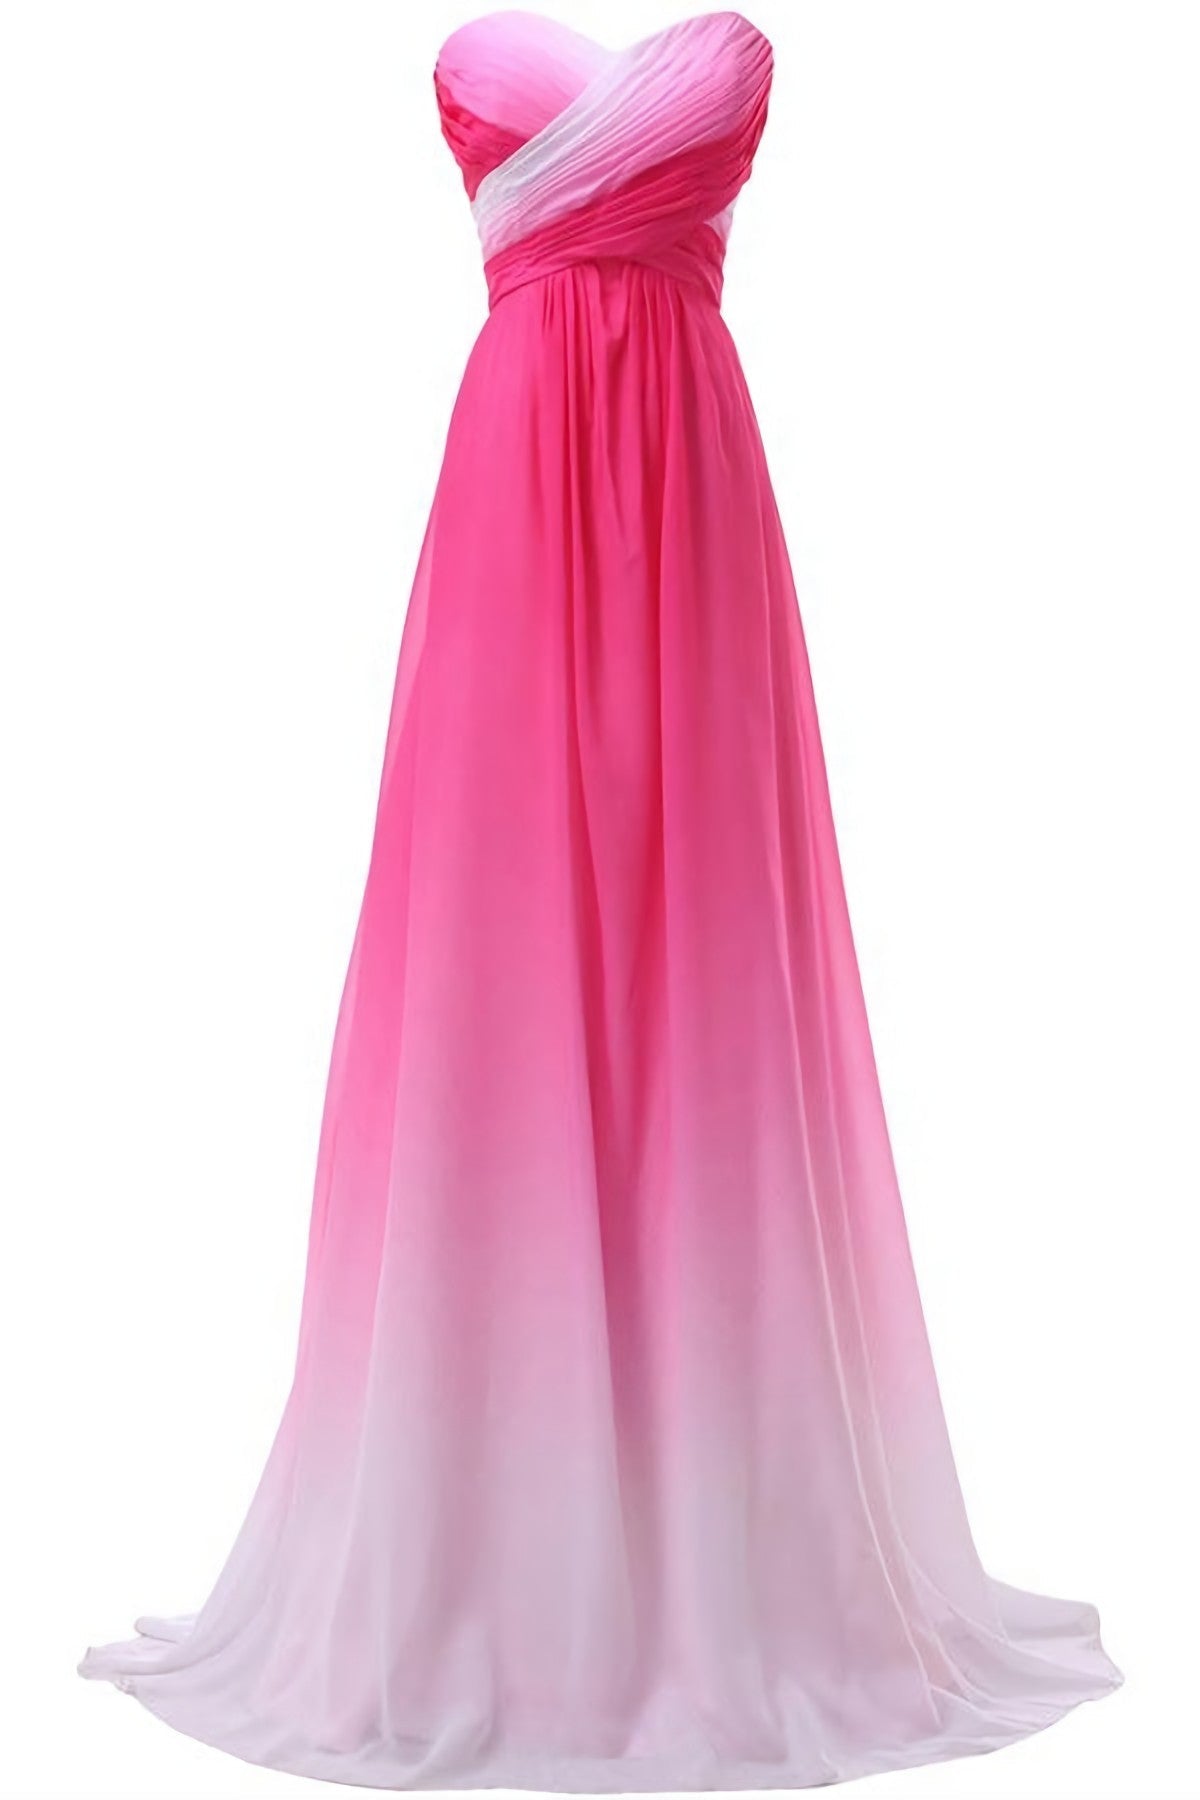 Pretty Pink Sweetheart Long Gradient Chiffon Elegant Corset Prom Dresses outfit, Prom Dress Websites